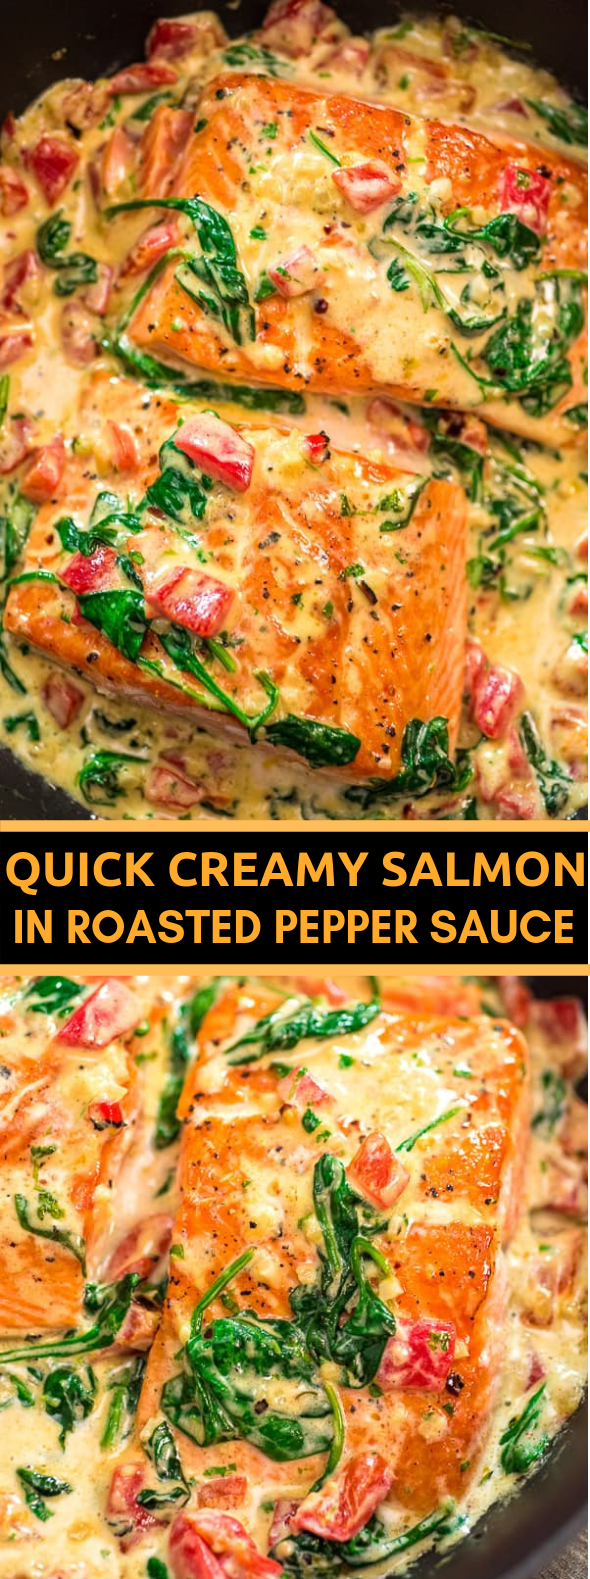 SALMON IN ROASTED PEPPER SAUCE #dinner #salmonrecipe